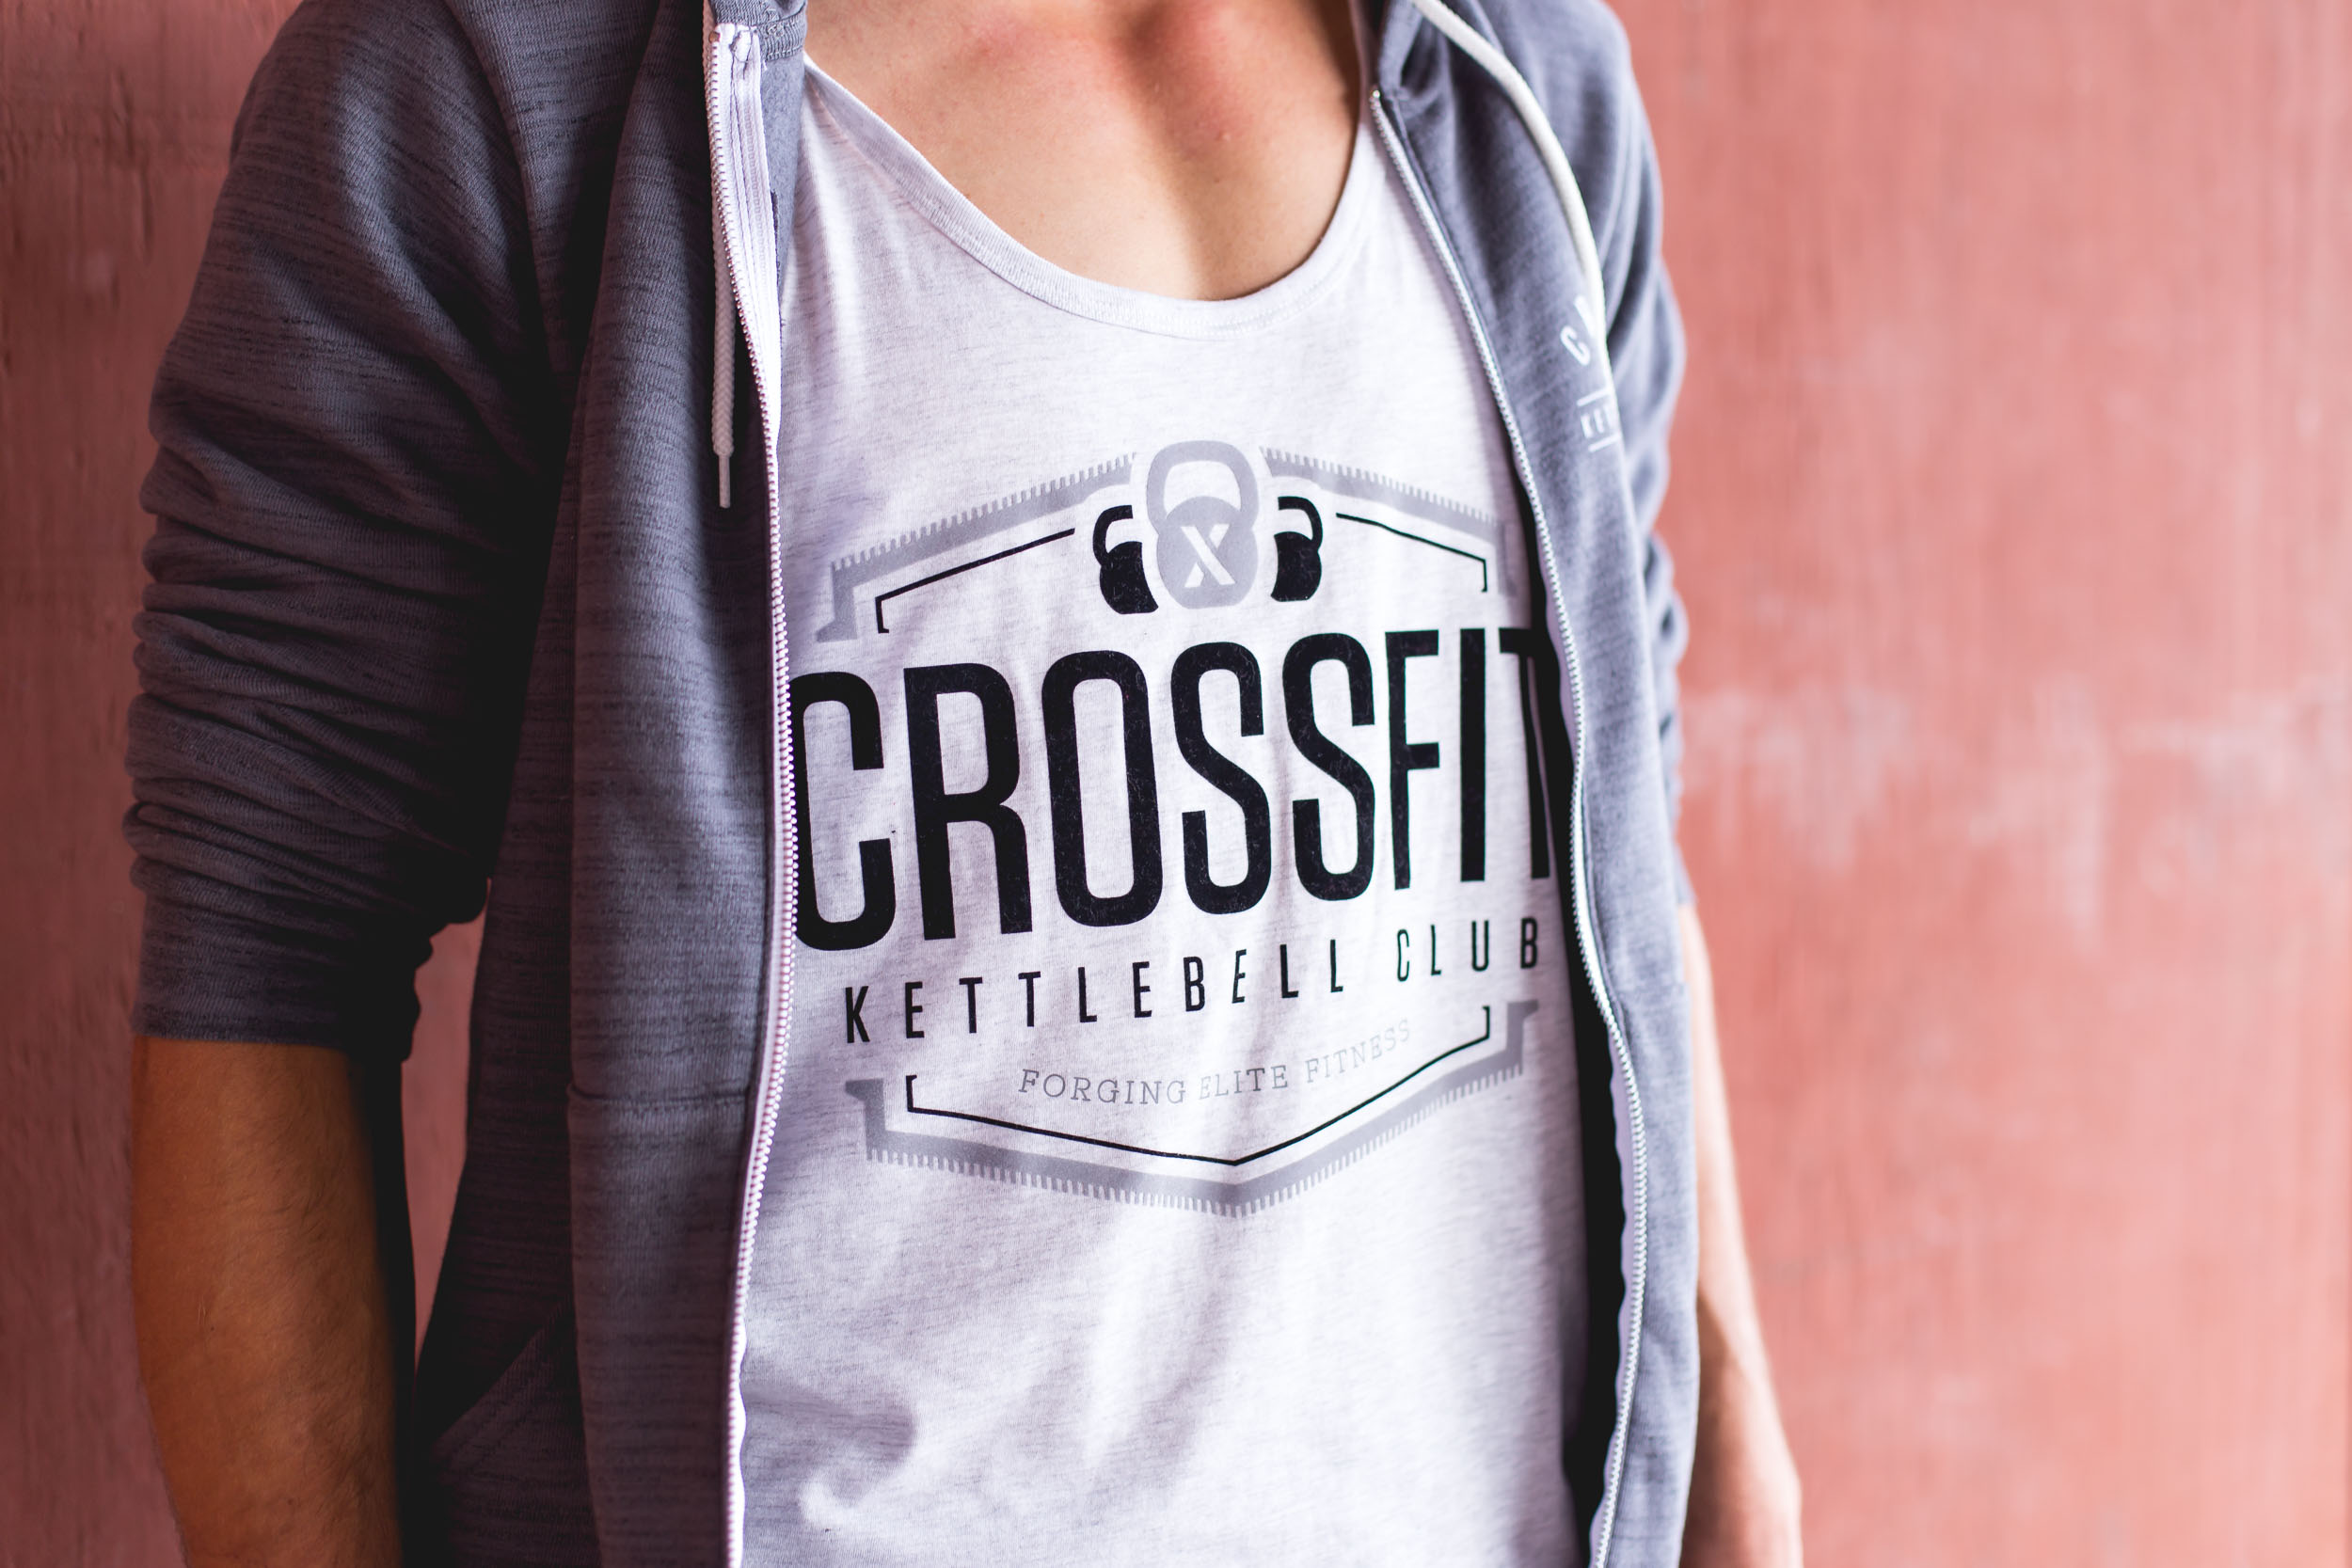 Crossfit UK printed clothing t-shirts-0143.jpg